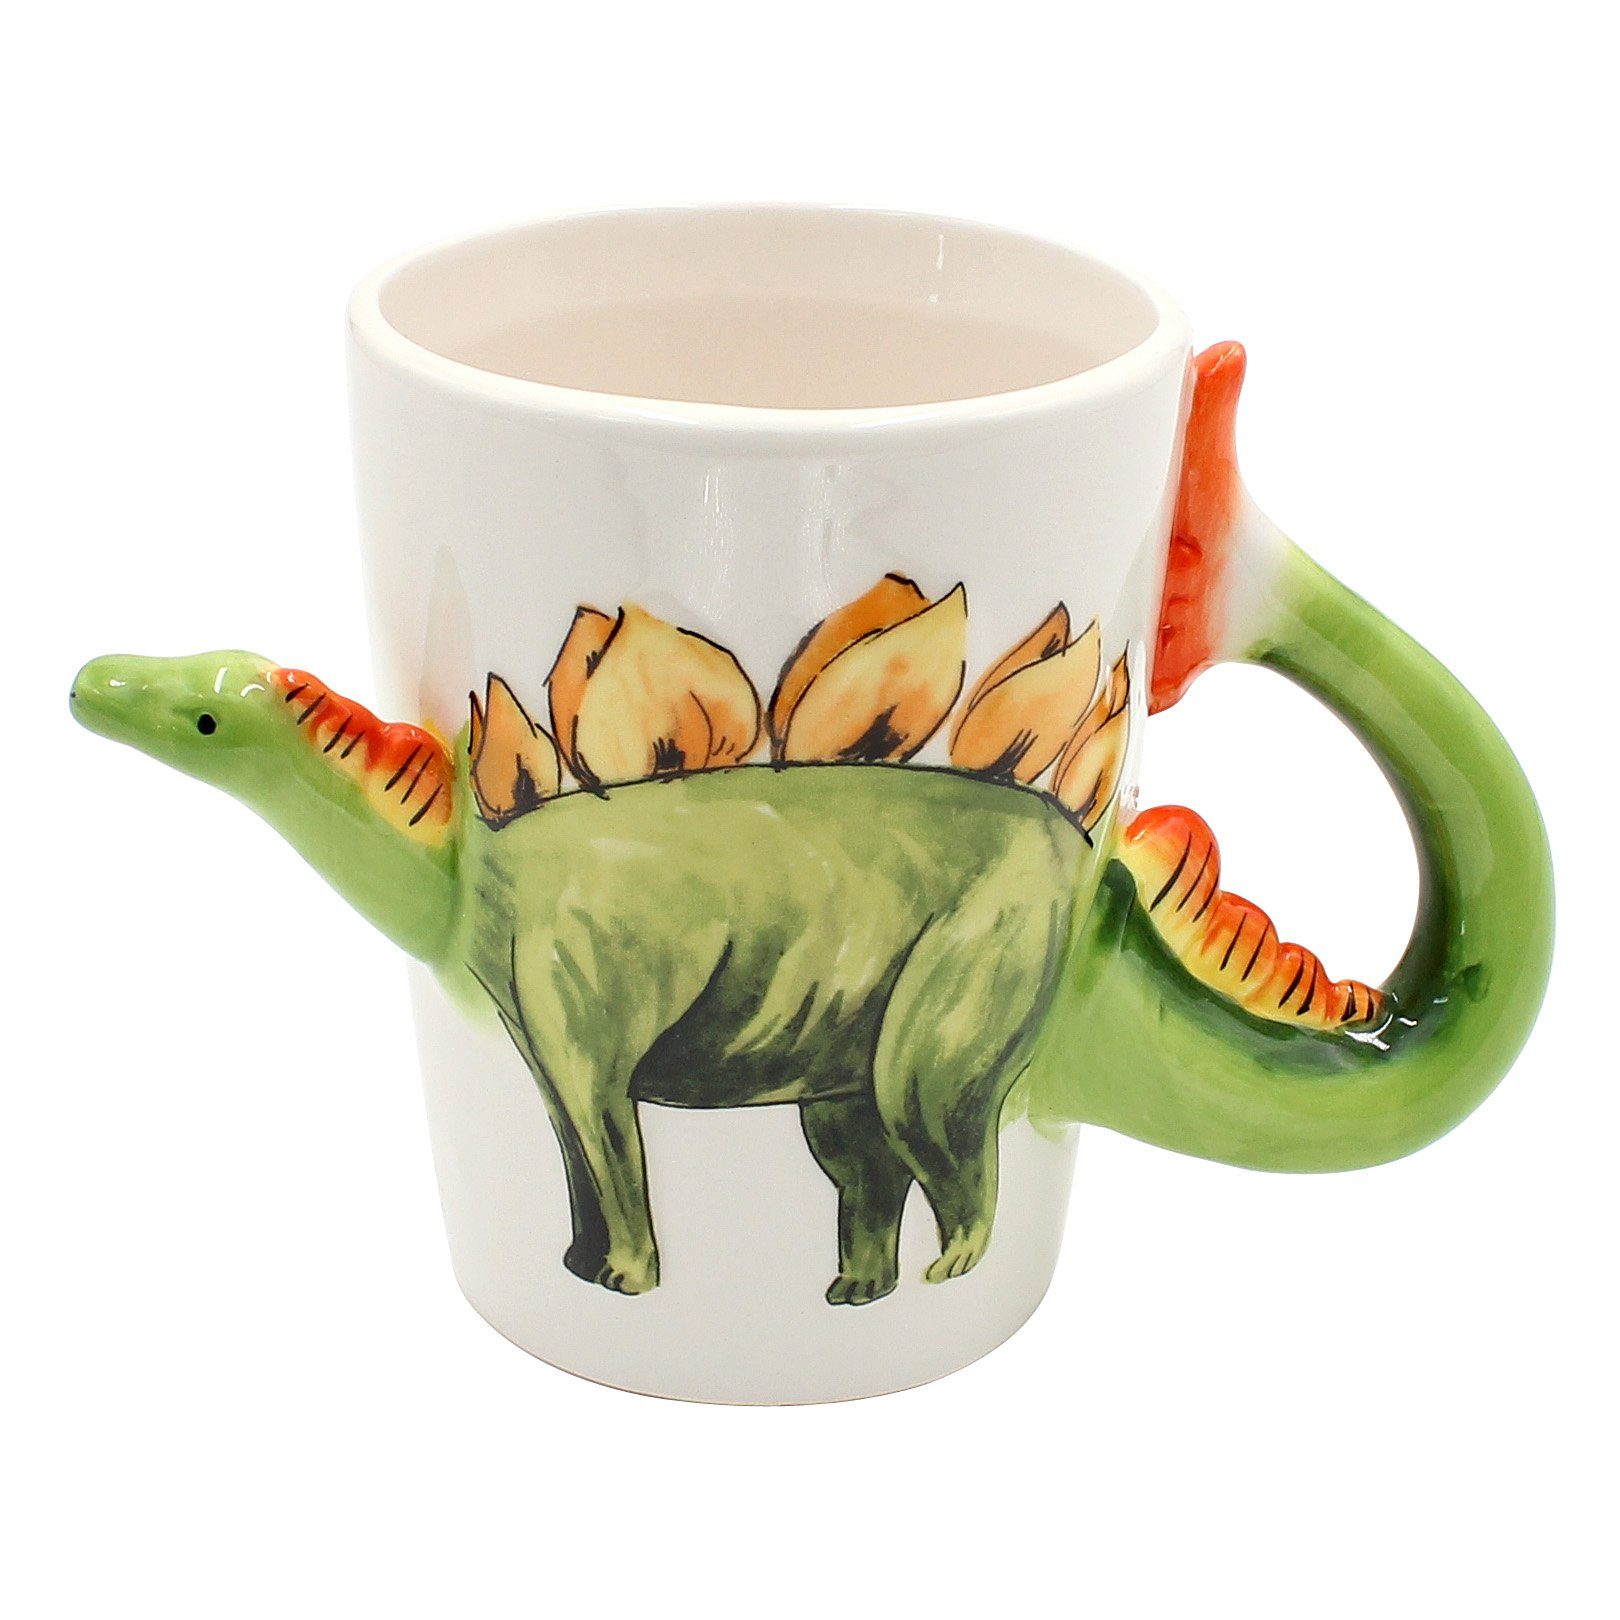 Dekohelden24 Tasse Kaffeebecher Kaffeetasse mit Dino aus Keramik versch. Motive, Porzellan hellgrün